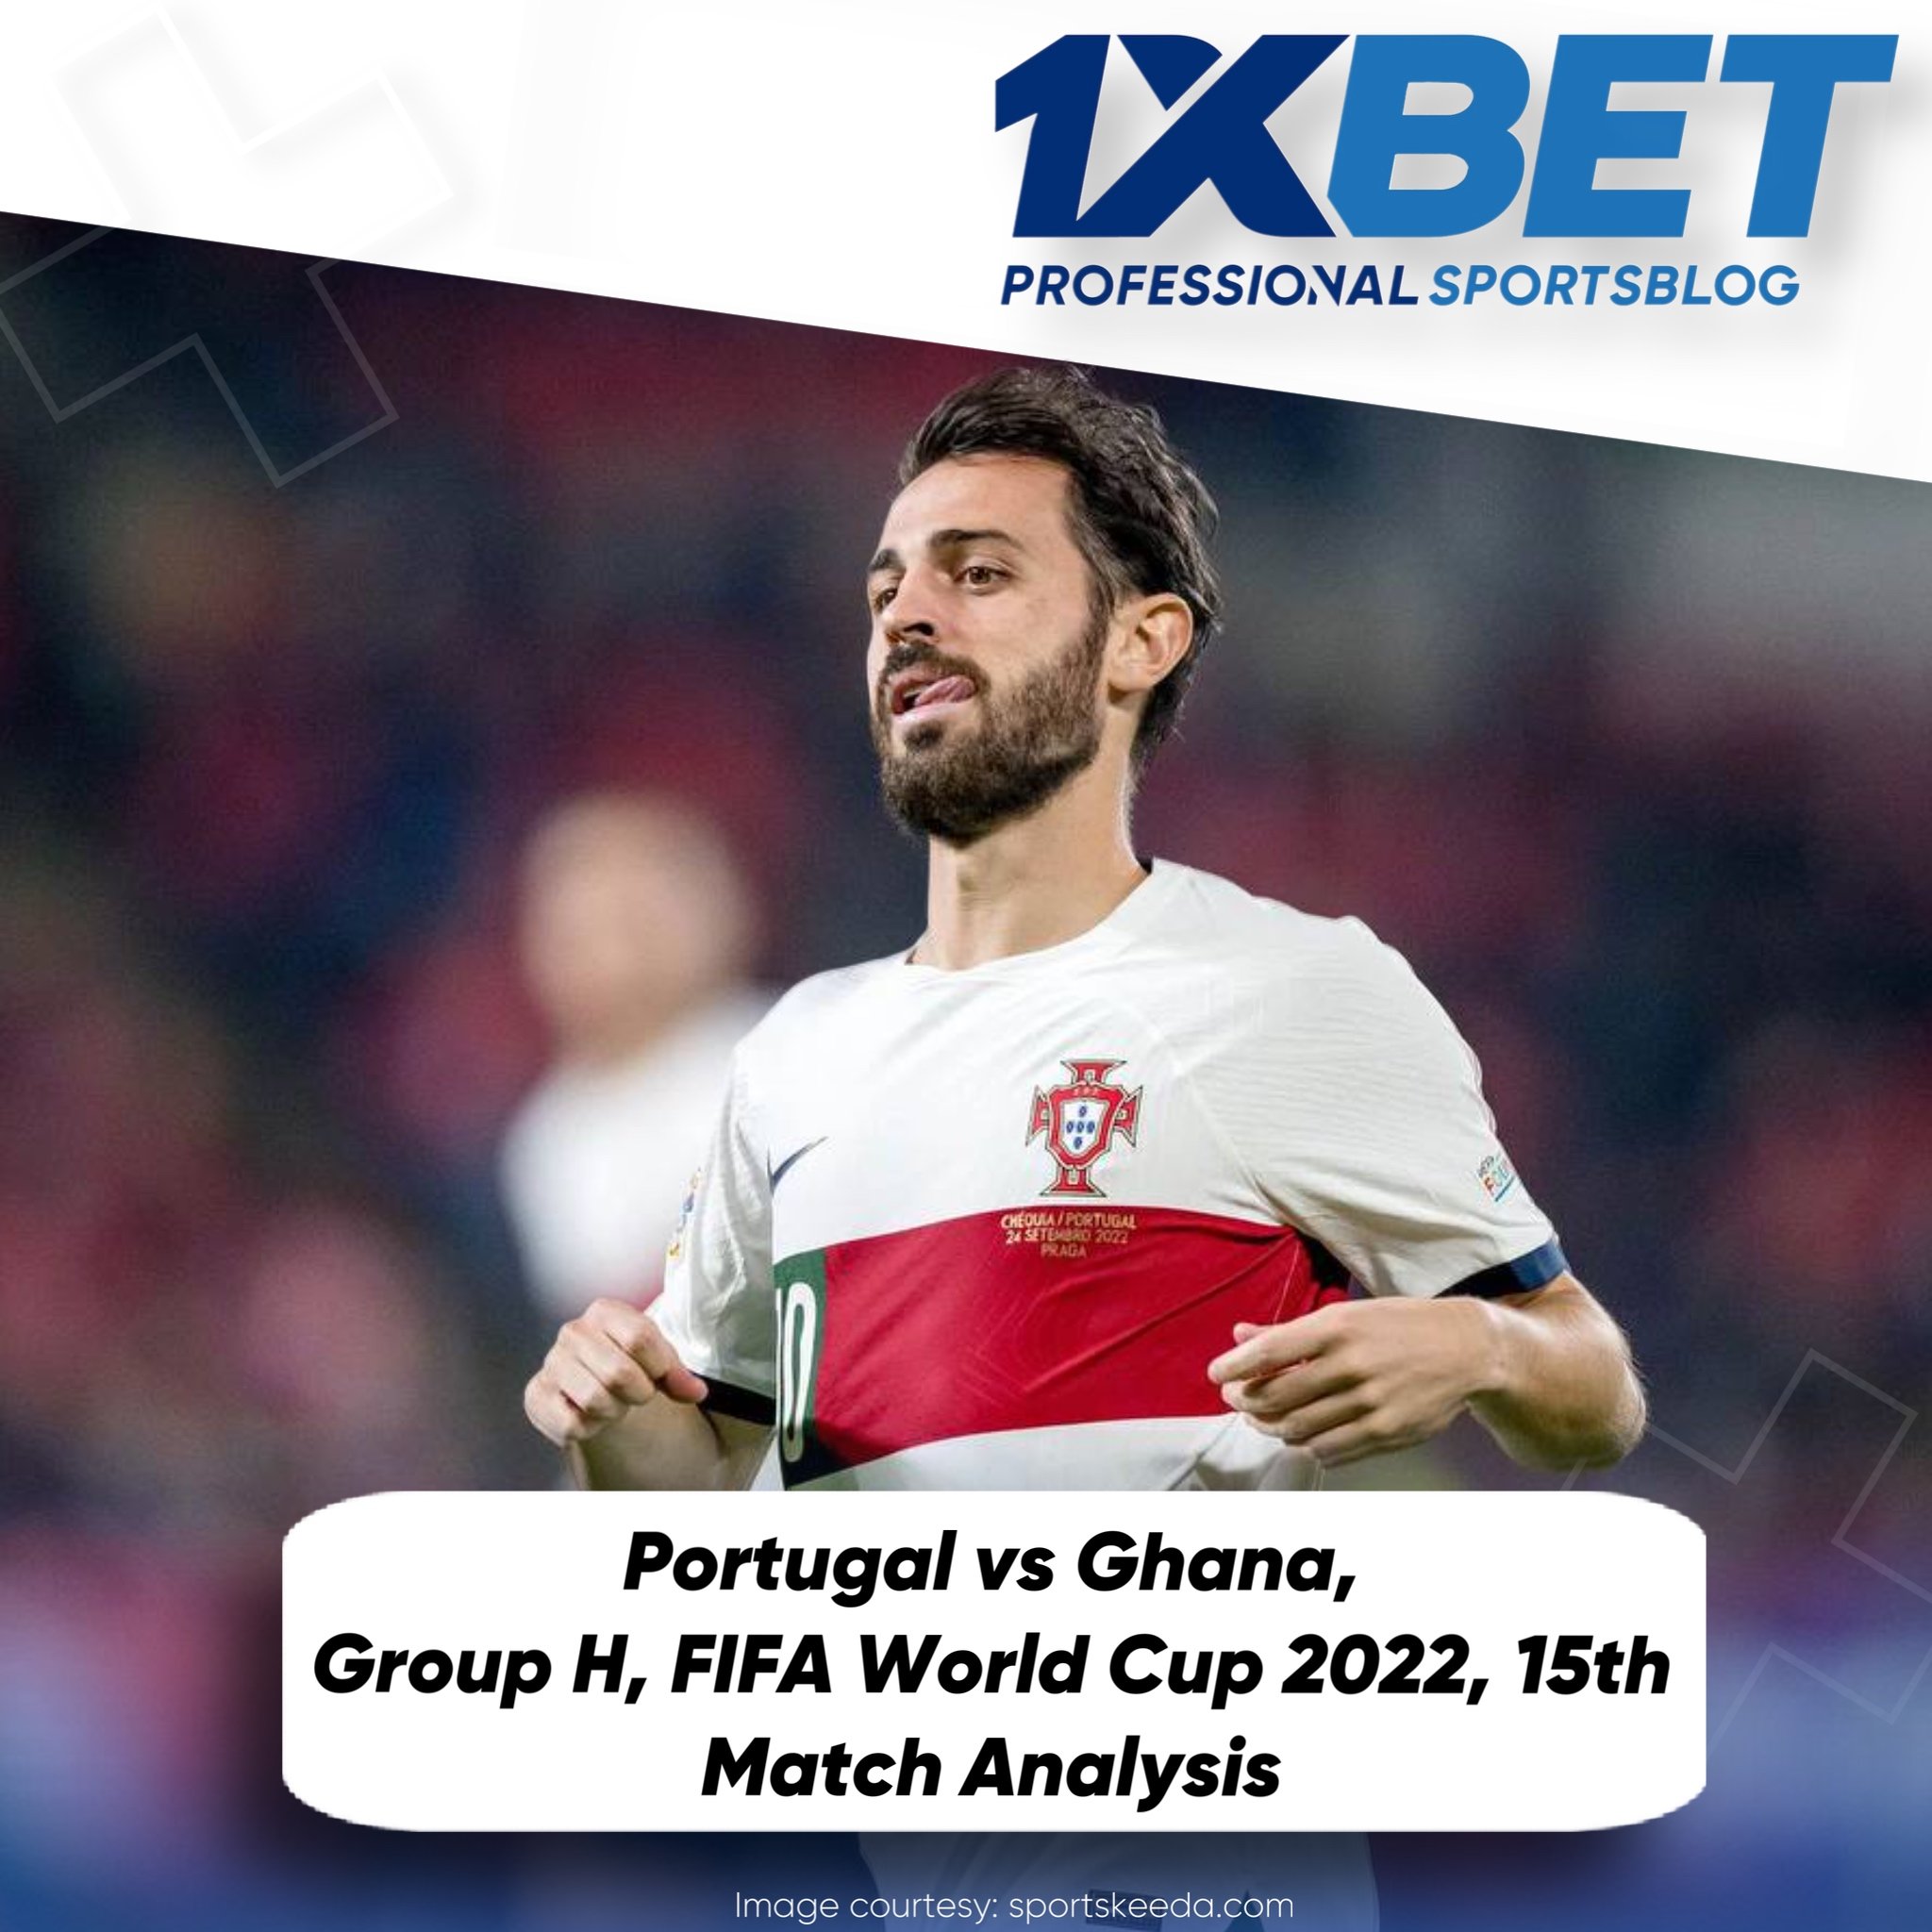 Portugal vs Ghana, Group H, FIFA World Cup 2022, 15th Match Analysis